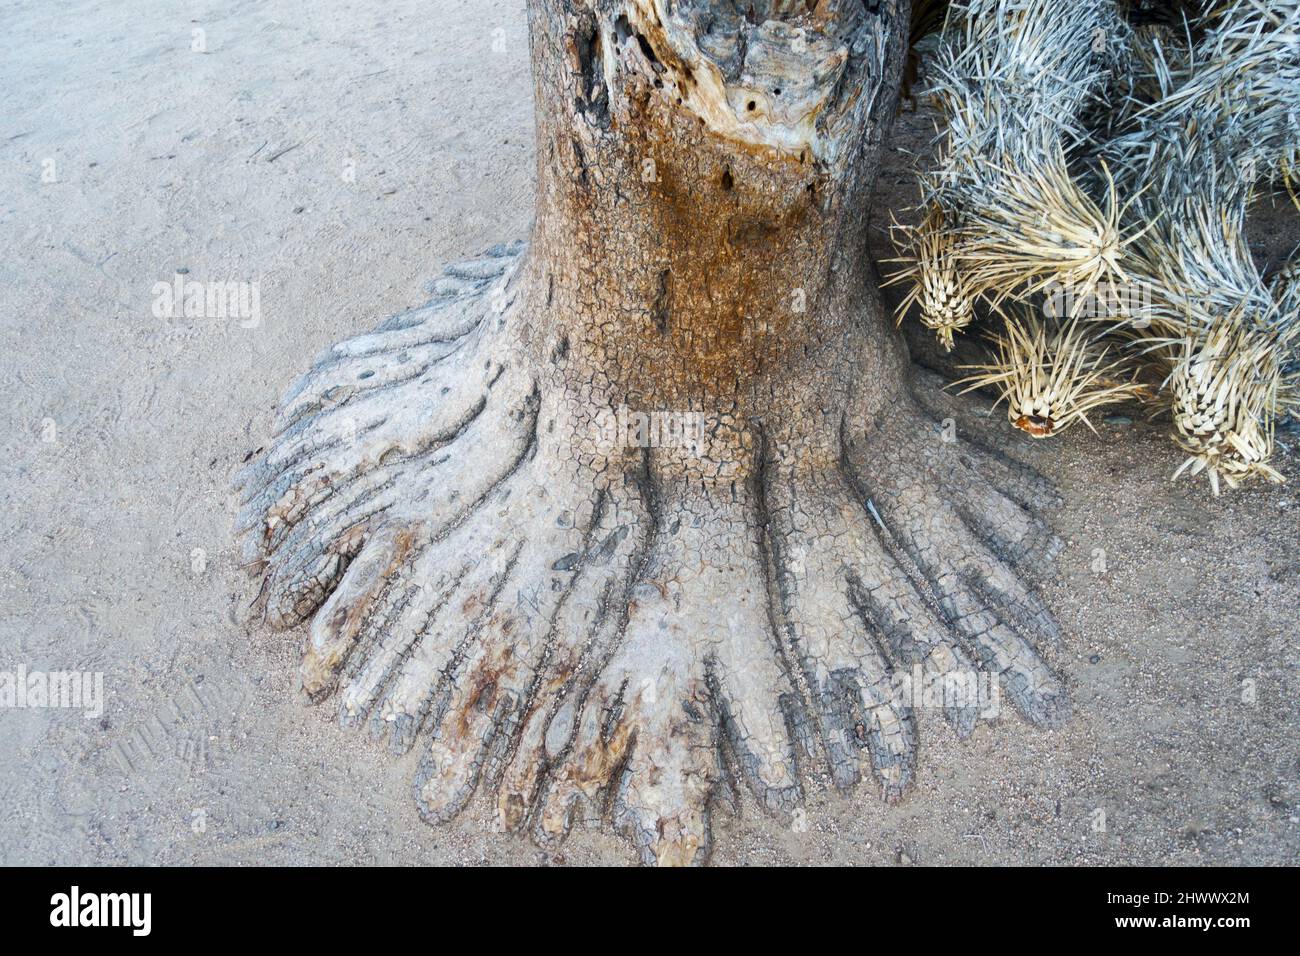 Barren Desert Plant Exposed Roots Resembling multi finger foot. Scenic Barker Dam Hiking Trail in Joshua Tree National Park, California USA Stock Photo